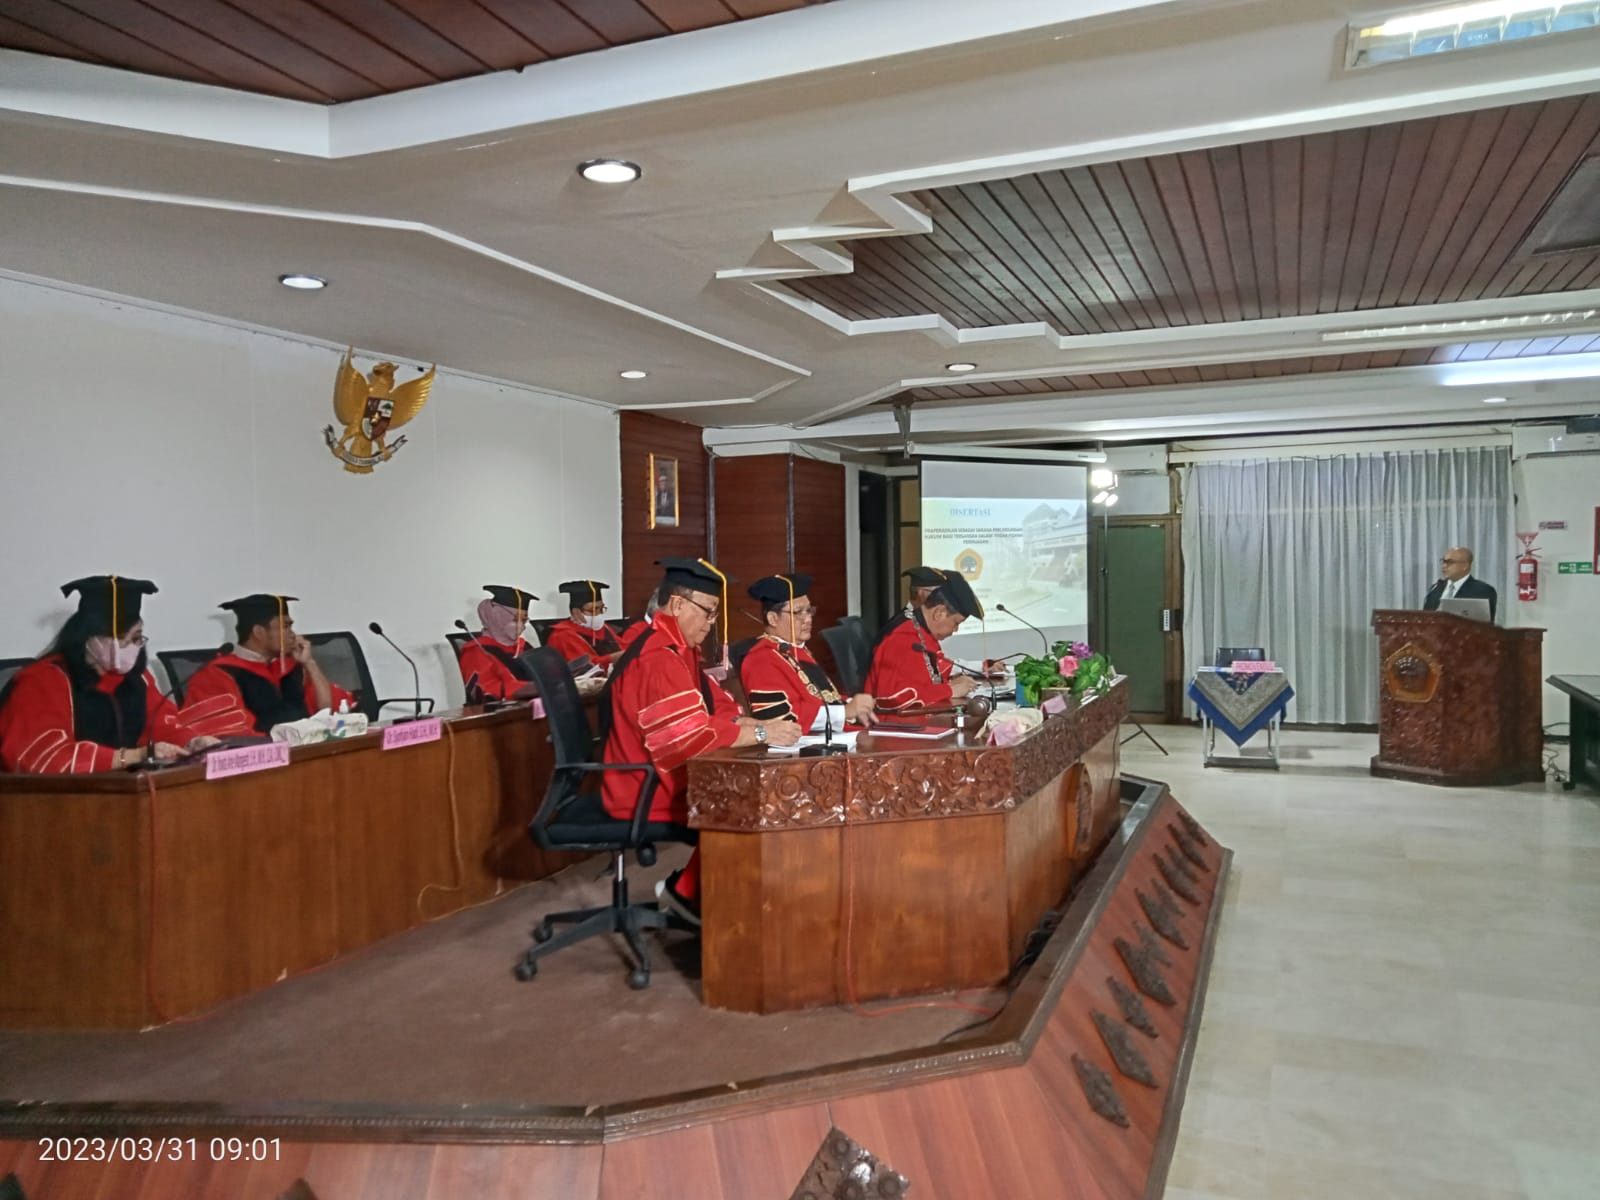 Ujian Terbuka Agung Satryo Wibowo Fakultas Hukum Untag Surabaya